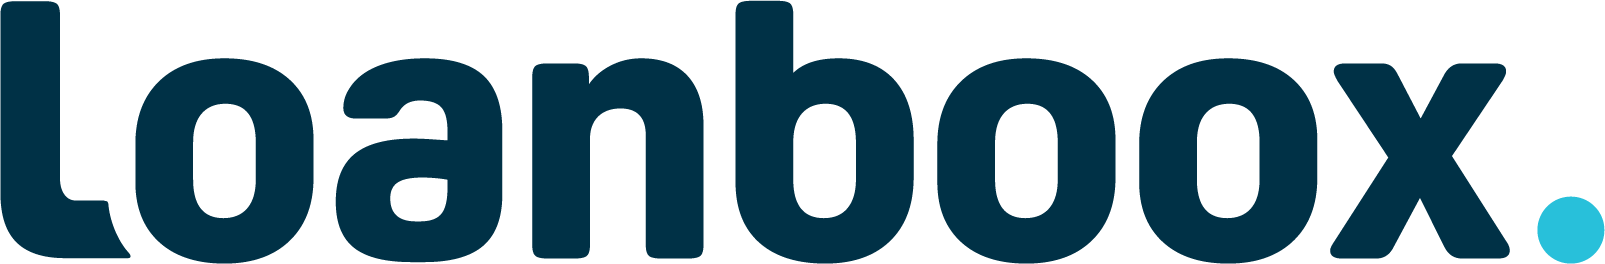 loanboox_logo